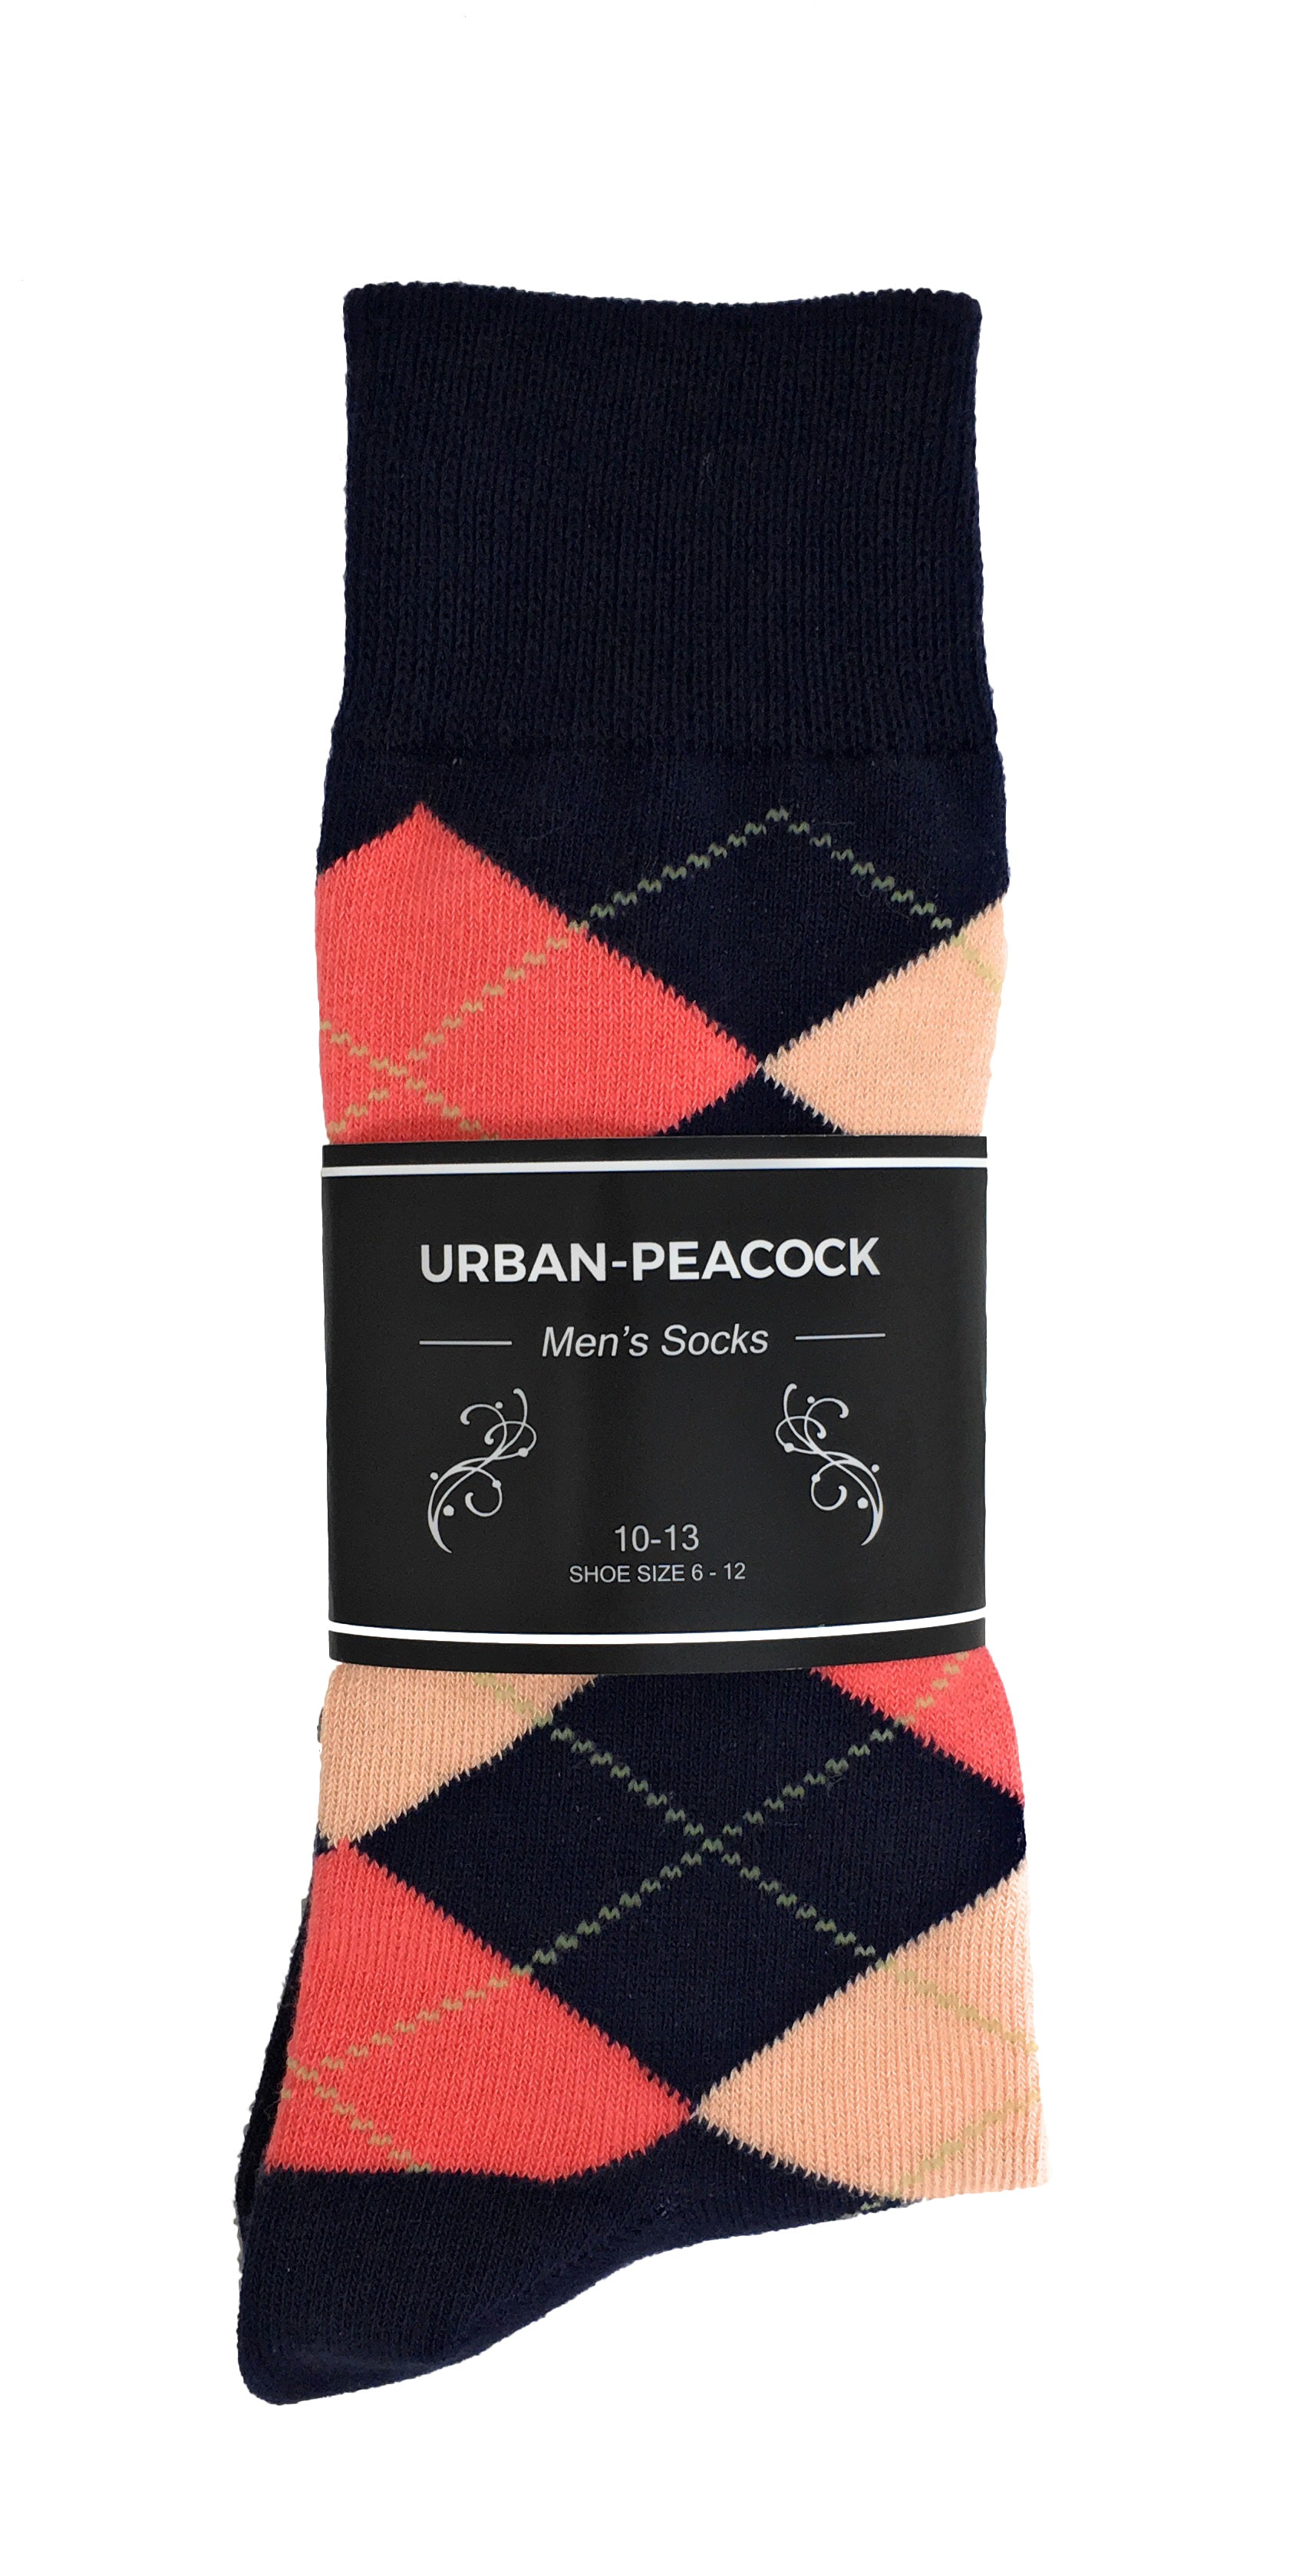 Black Label Men's Dress Socks - Argyle - Navy, Bellini Peach & Coral